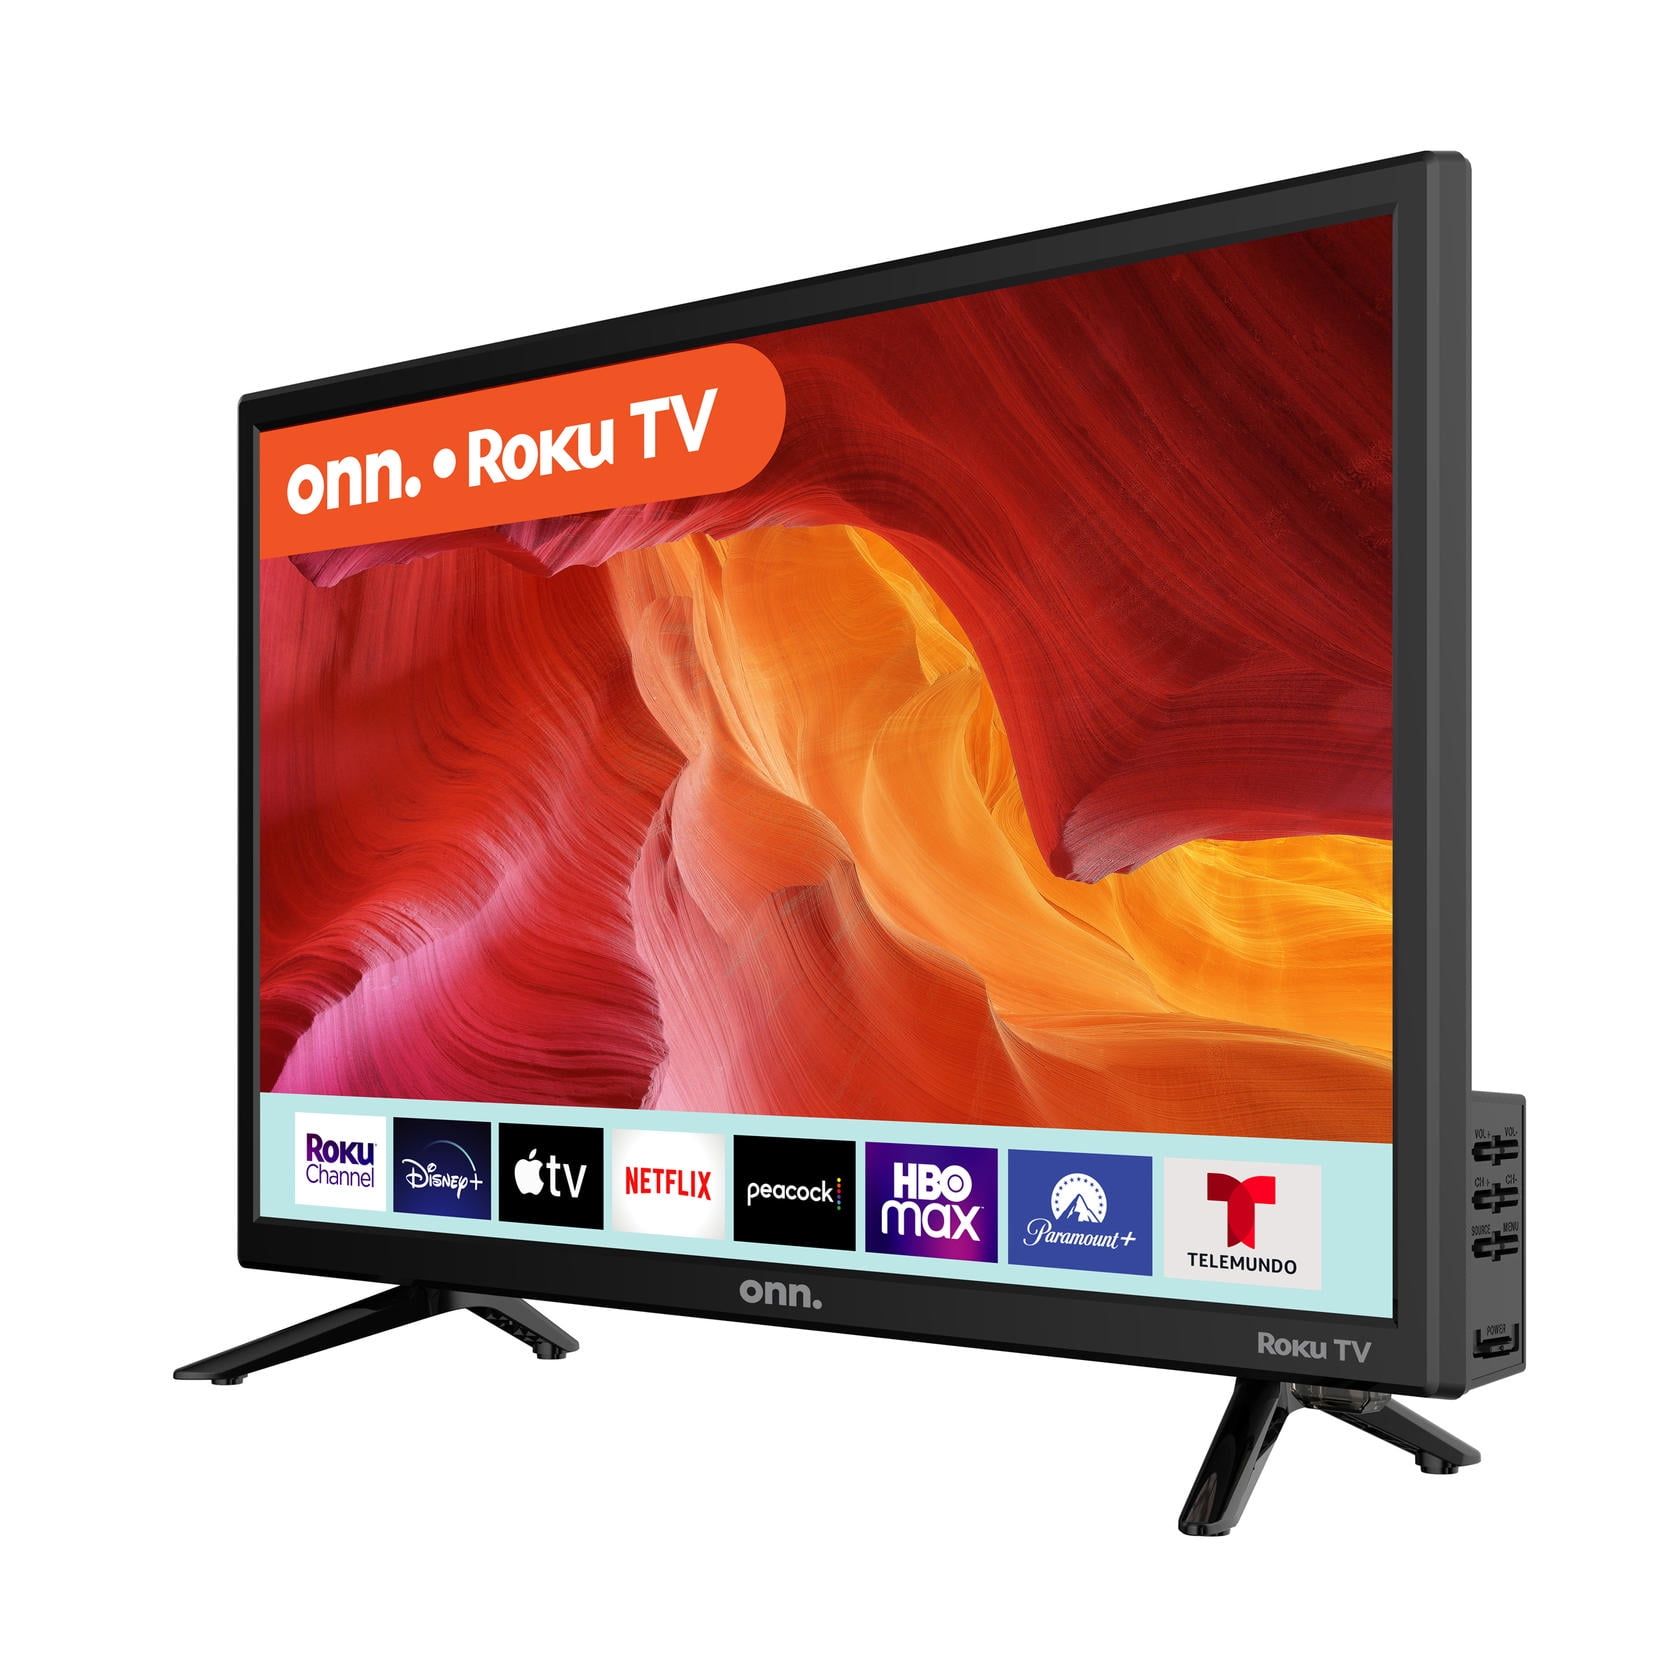 Thermocool 60 cm (24 inches) HD Ready LED TV, TC24N0000B